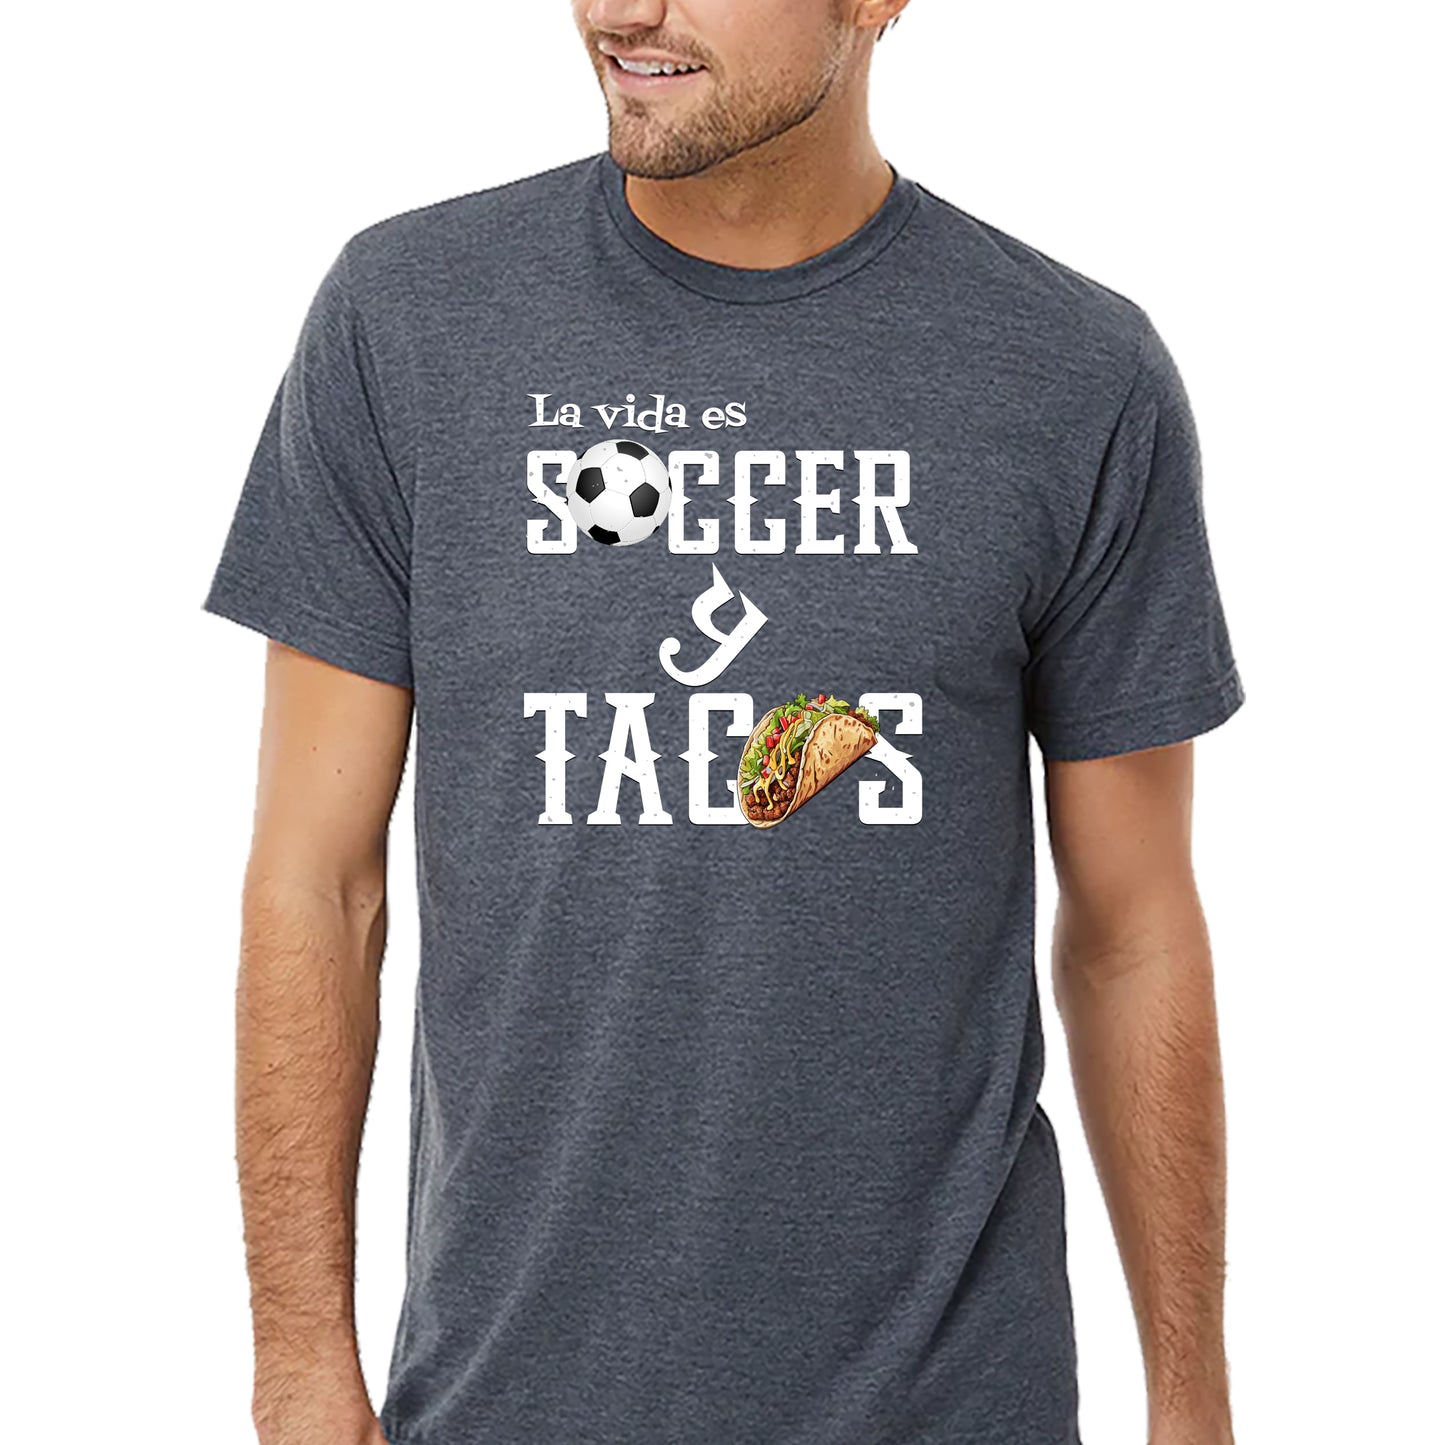 Soccer Y Tacos T-shirt